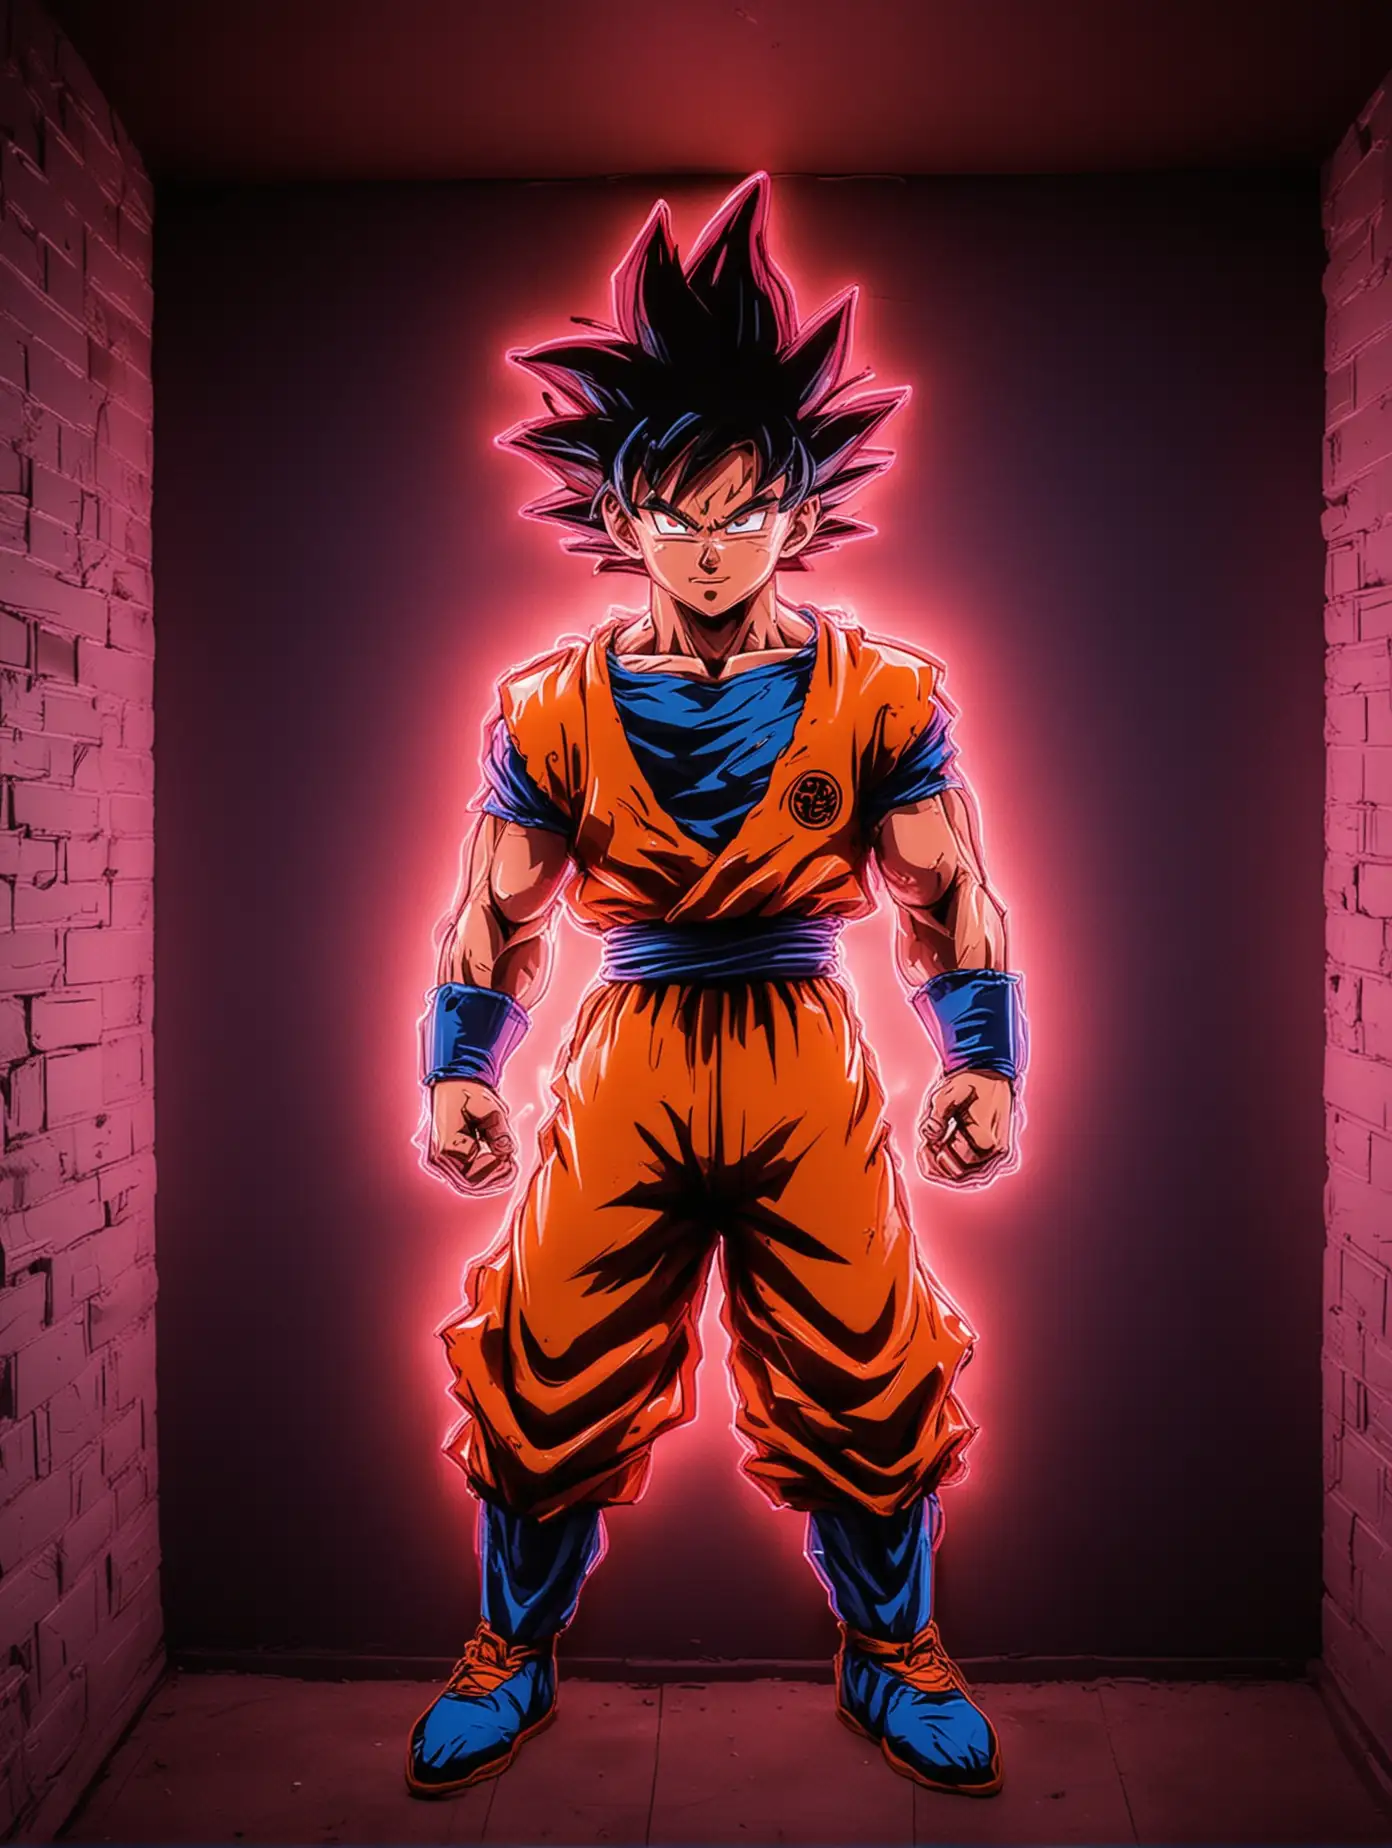 Dark Room with Colorful Neon Goku Wall Art